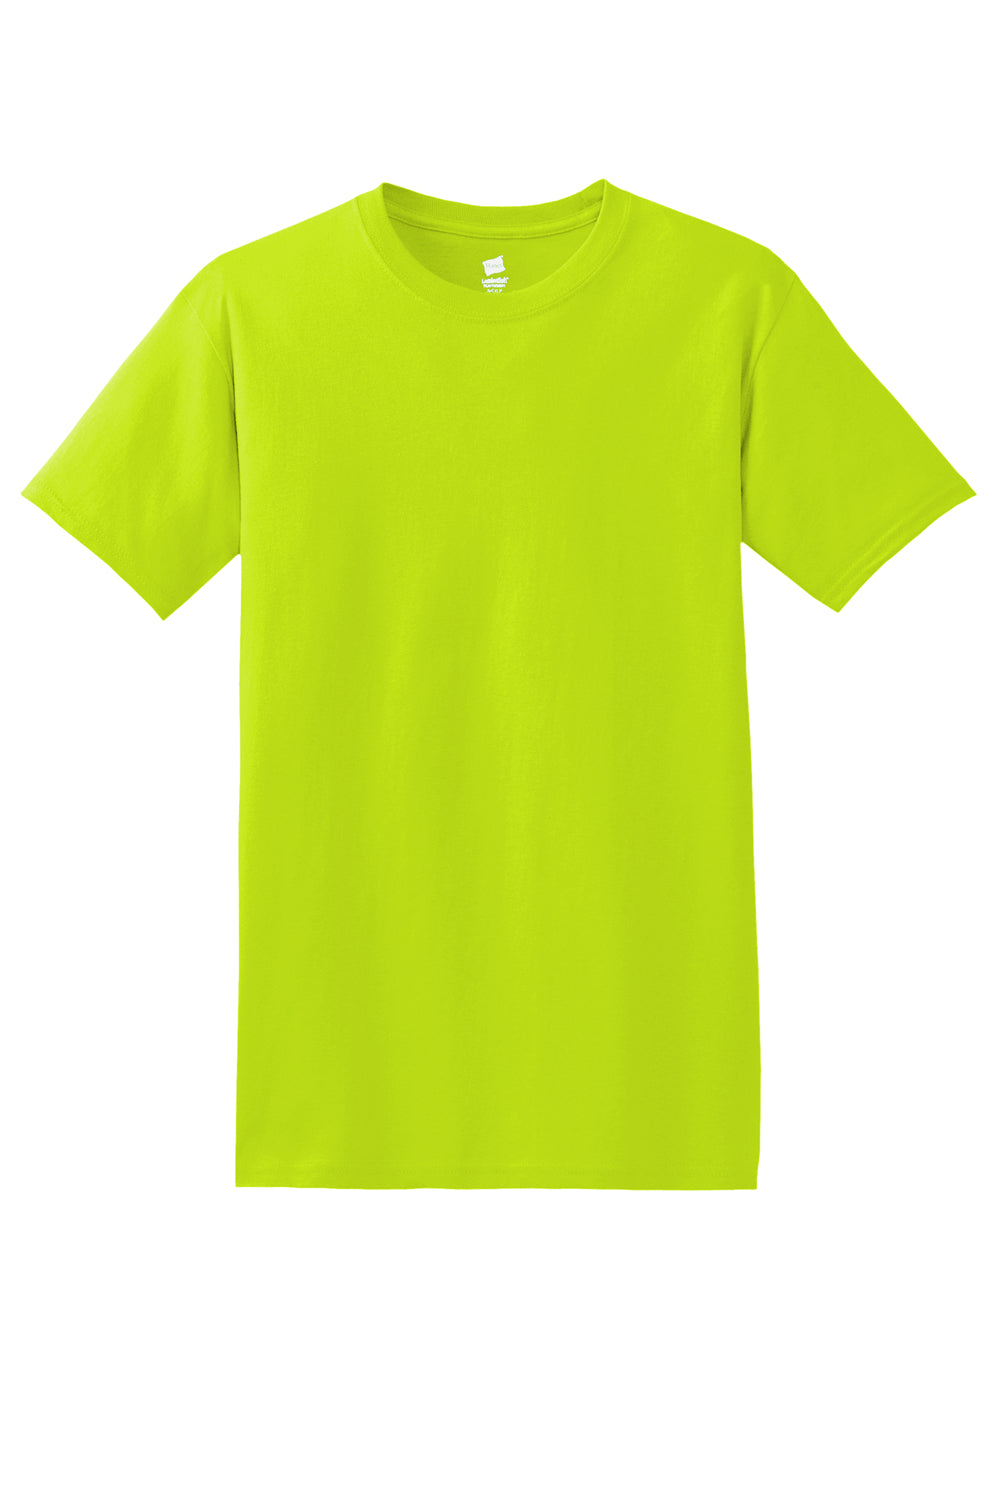 Hanes Mens ComfortSoft Short Sleeve Crewneck T-Shirt Safety Green Flat Front